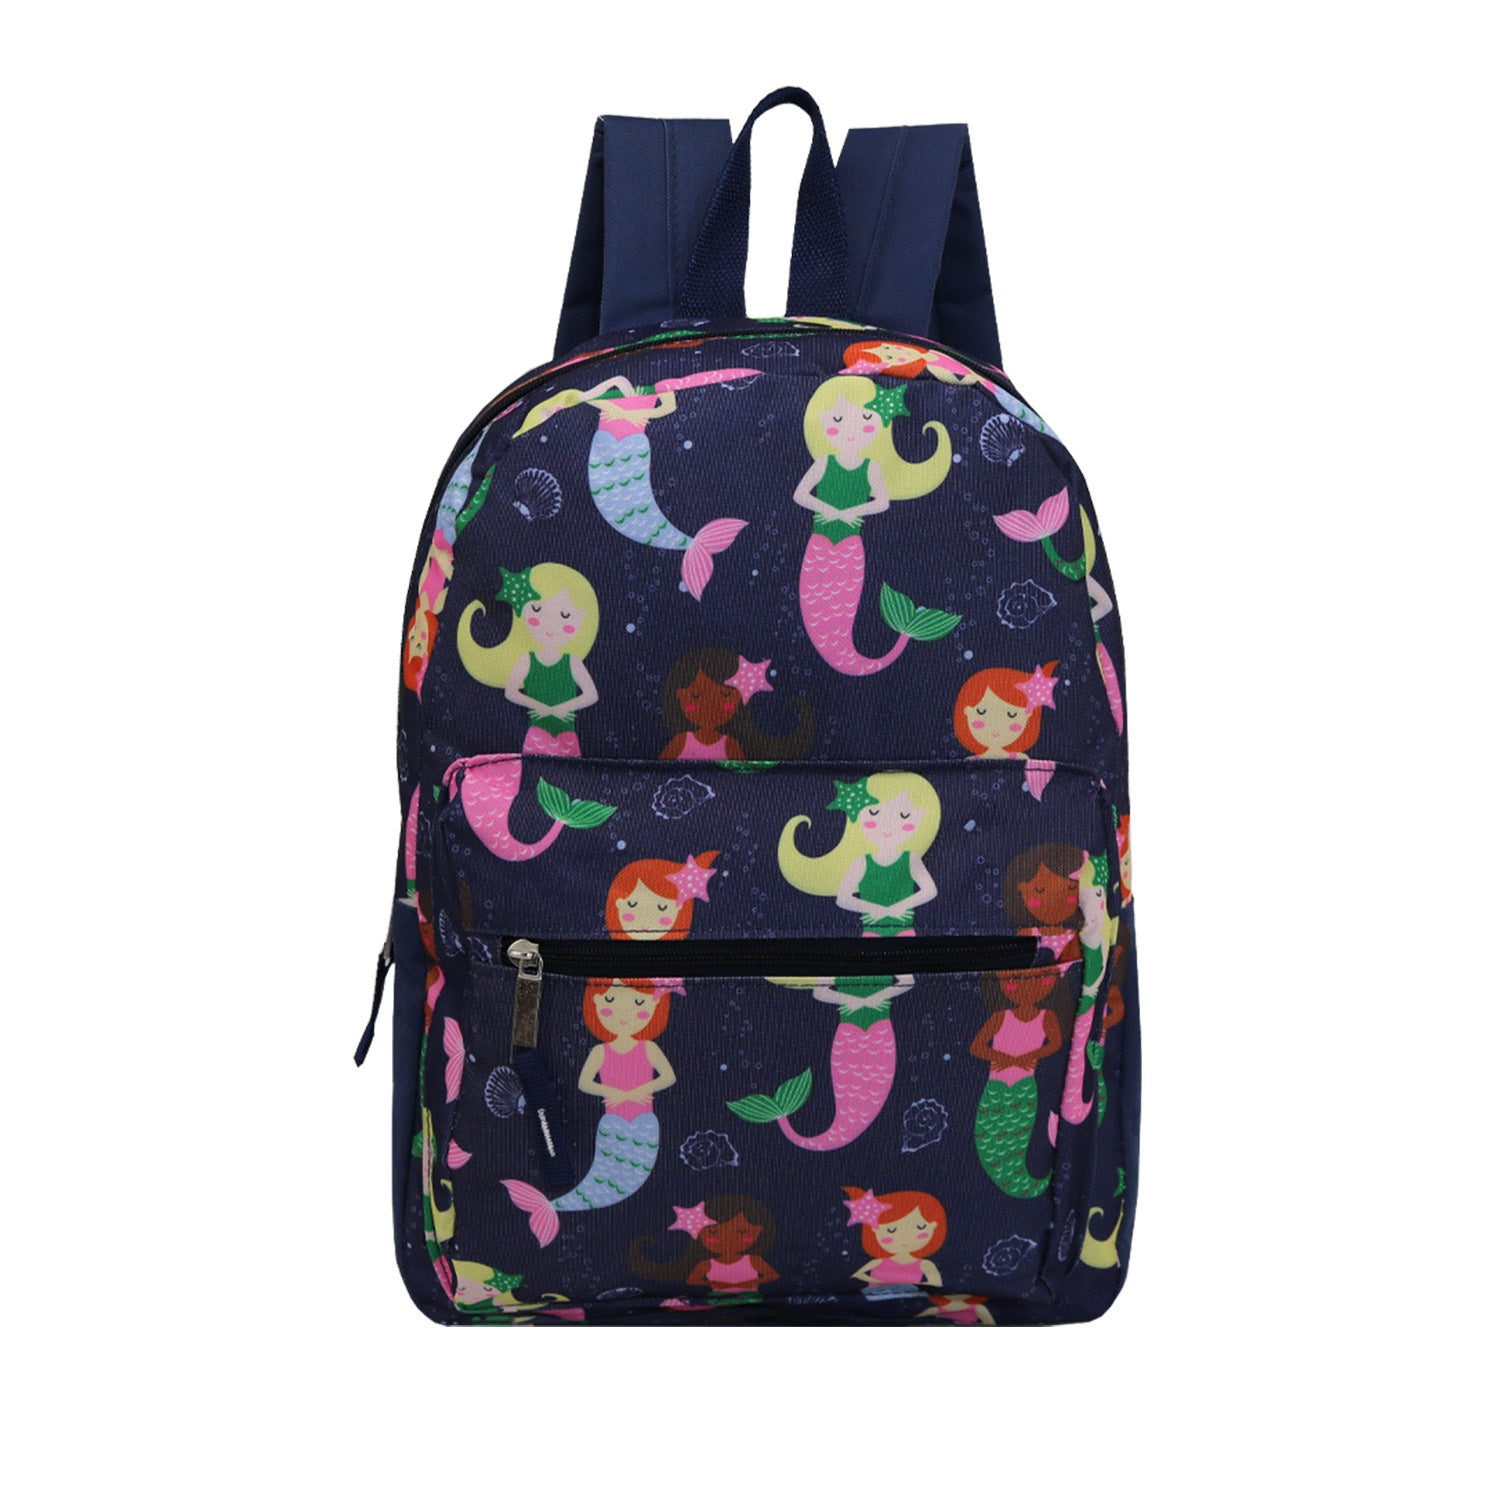 15" Kids Basic Wholesale Backpack in Assorted Prints- Bulk Case of 24